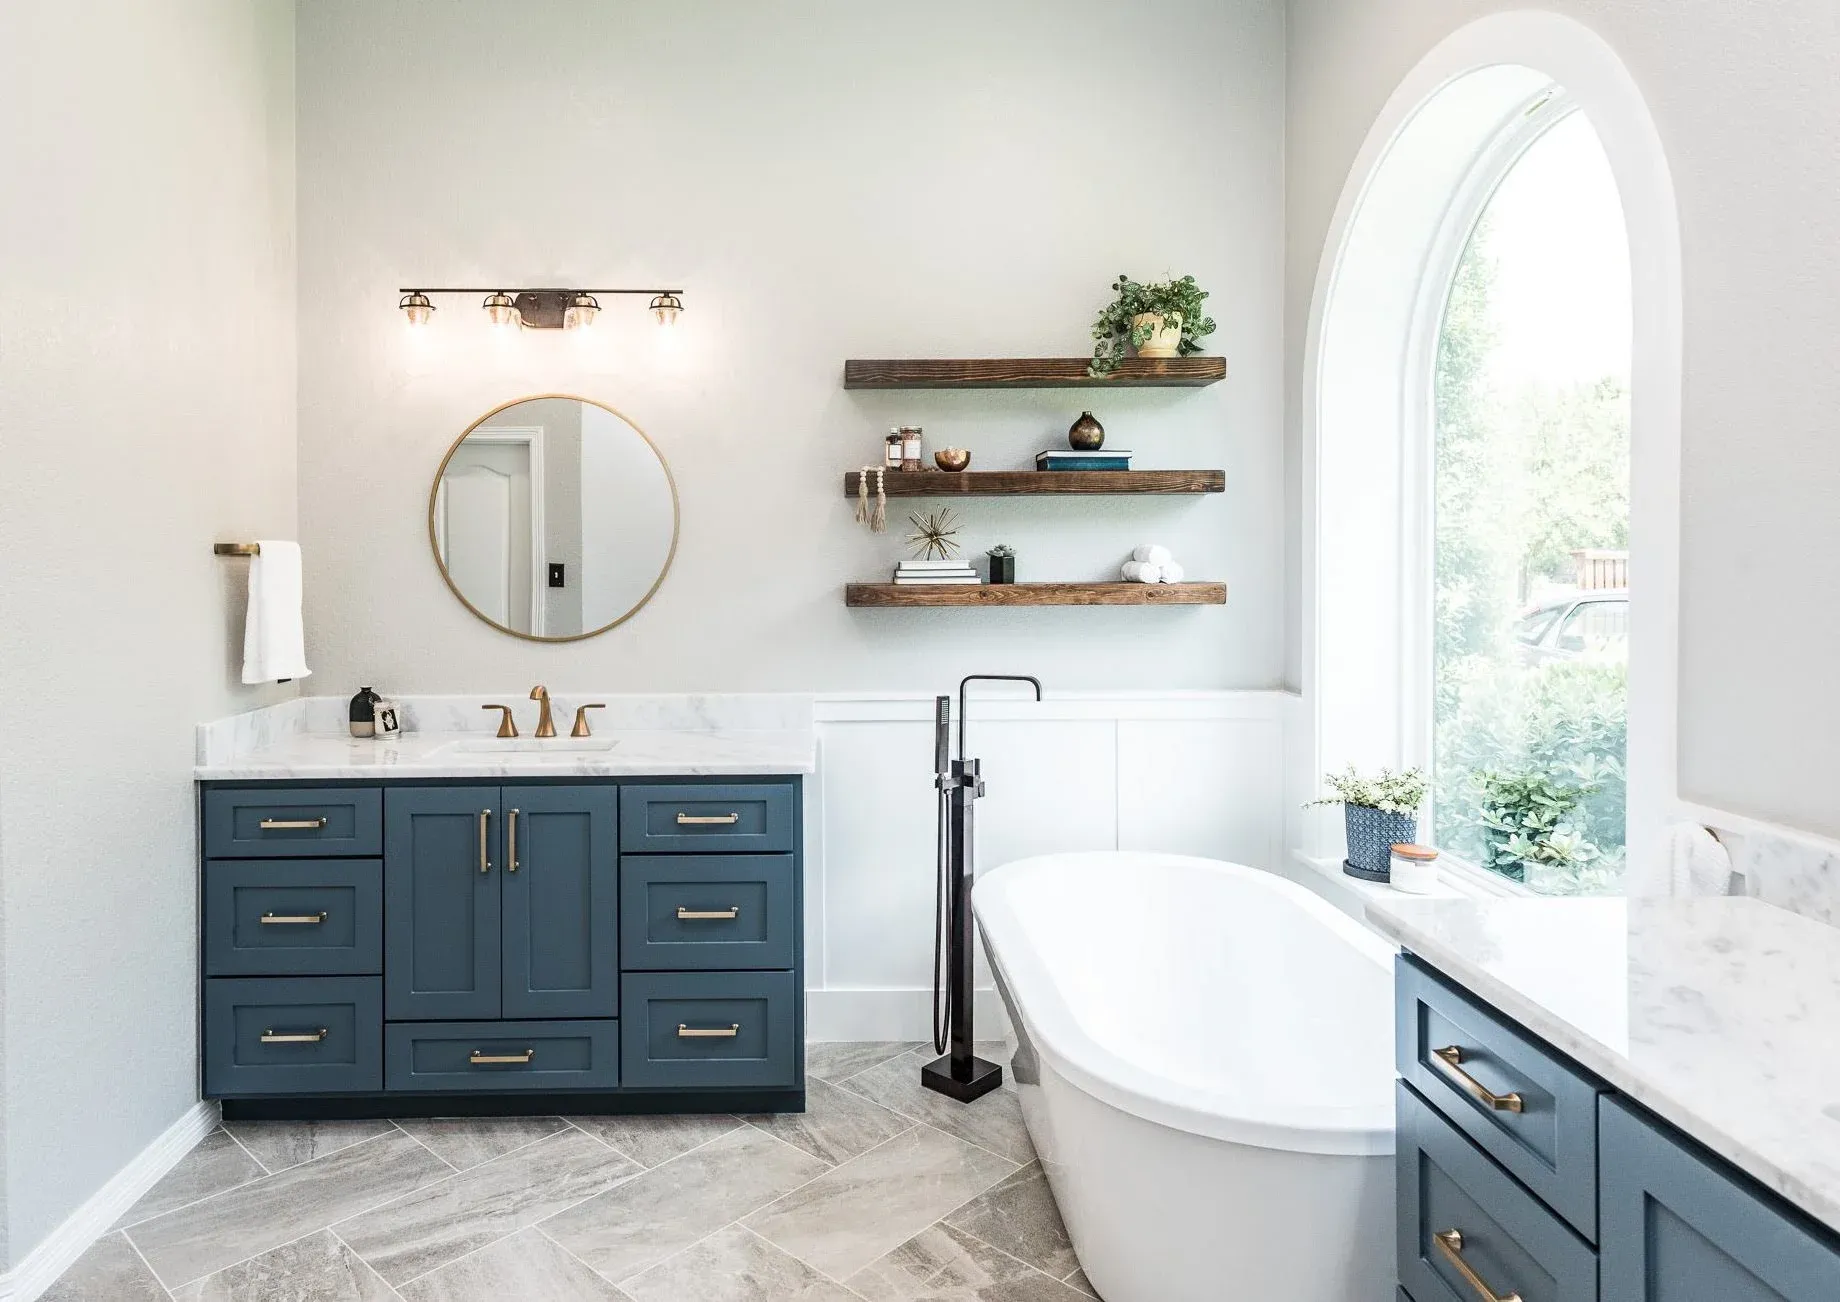 10 Best Bathroom Floor Tile Ideas